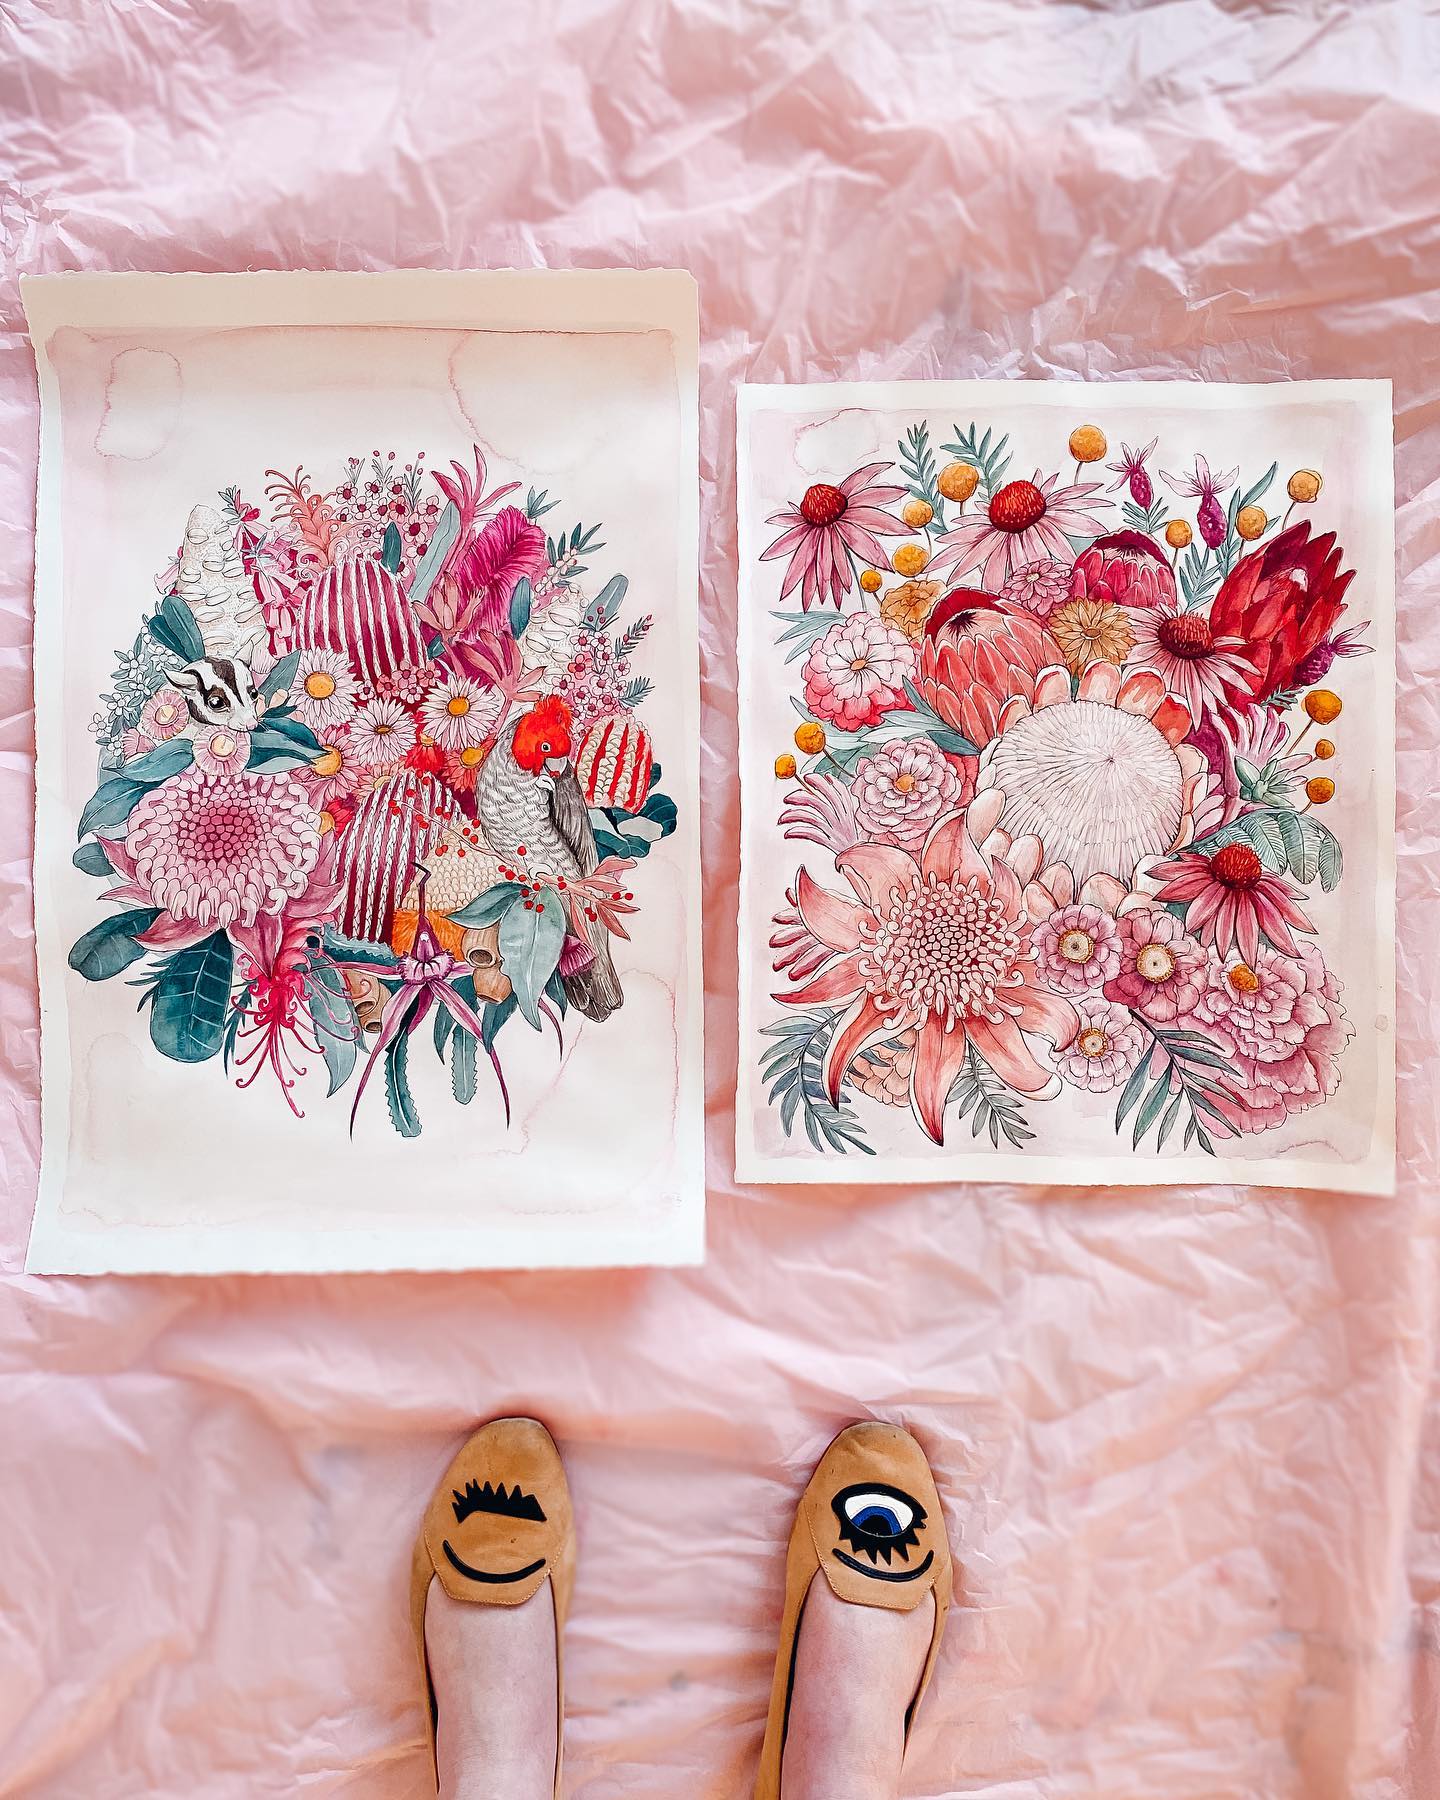 Flower Paintings Emma Morgan - on Thursd